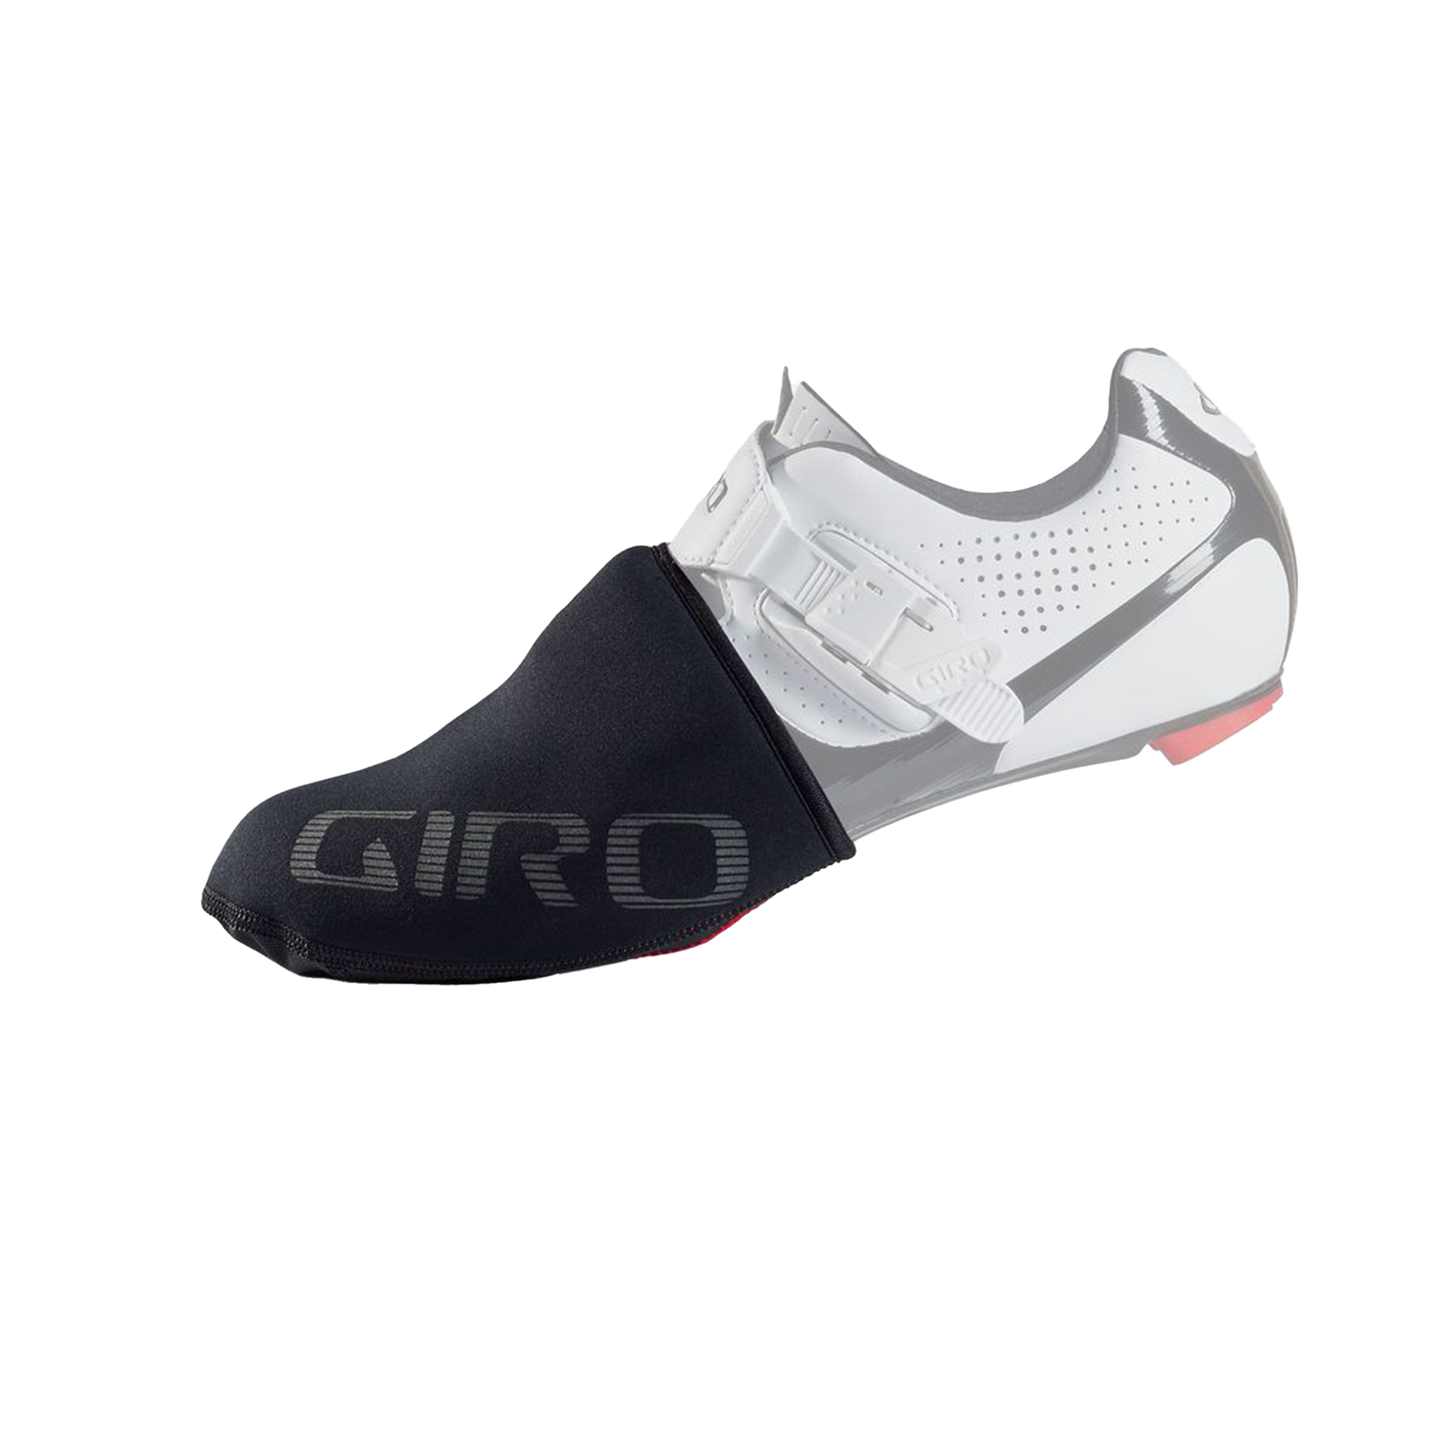 Giro Ambient Toe Cover Black Bike Accessories